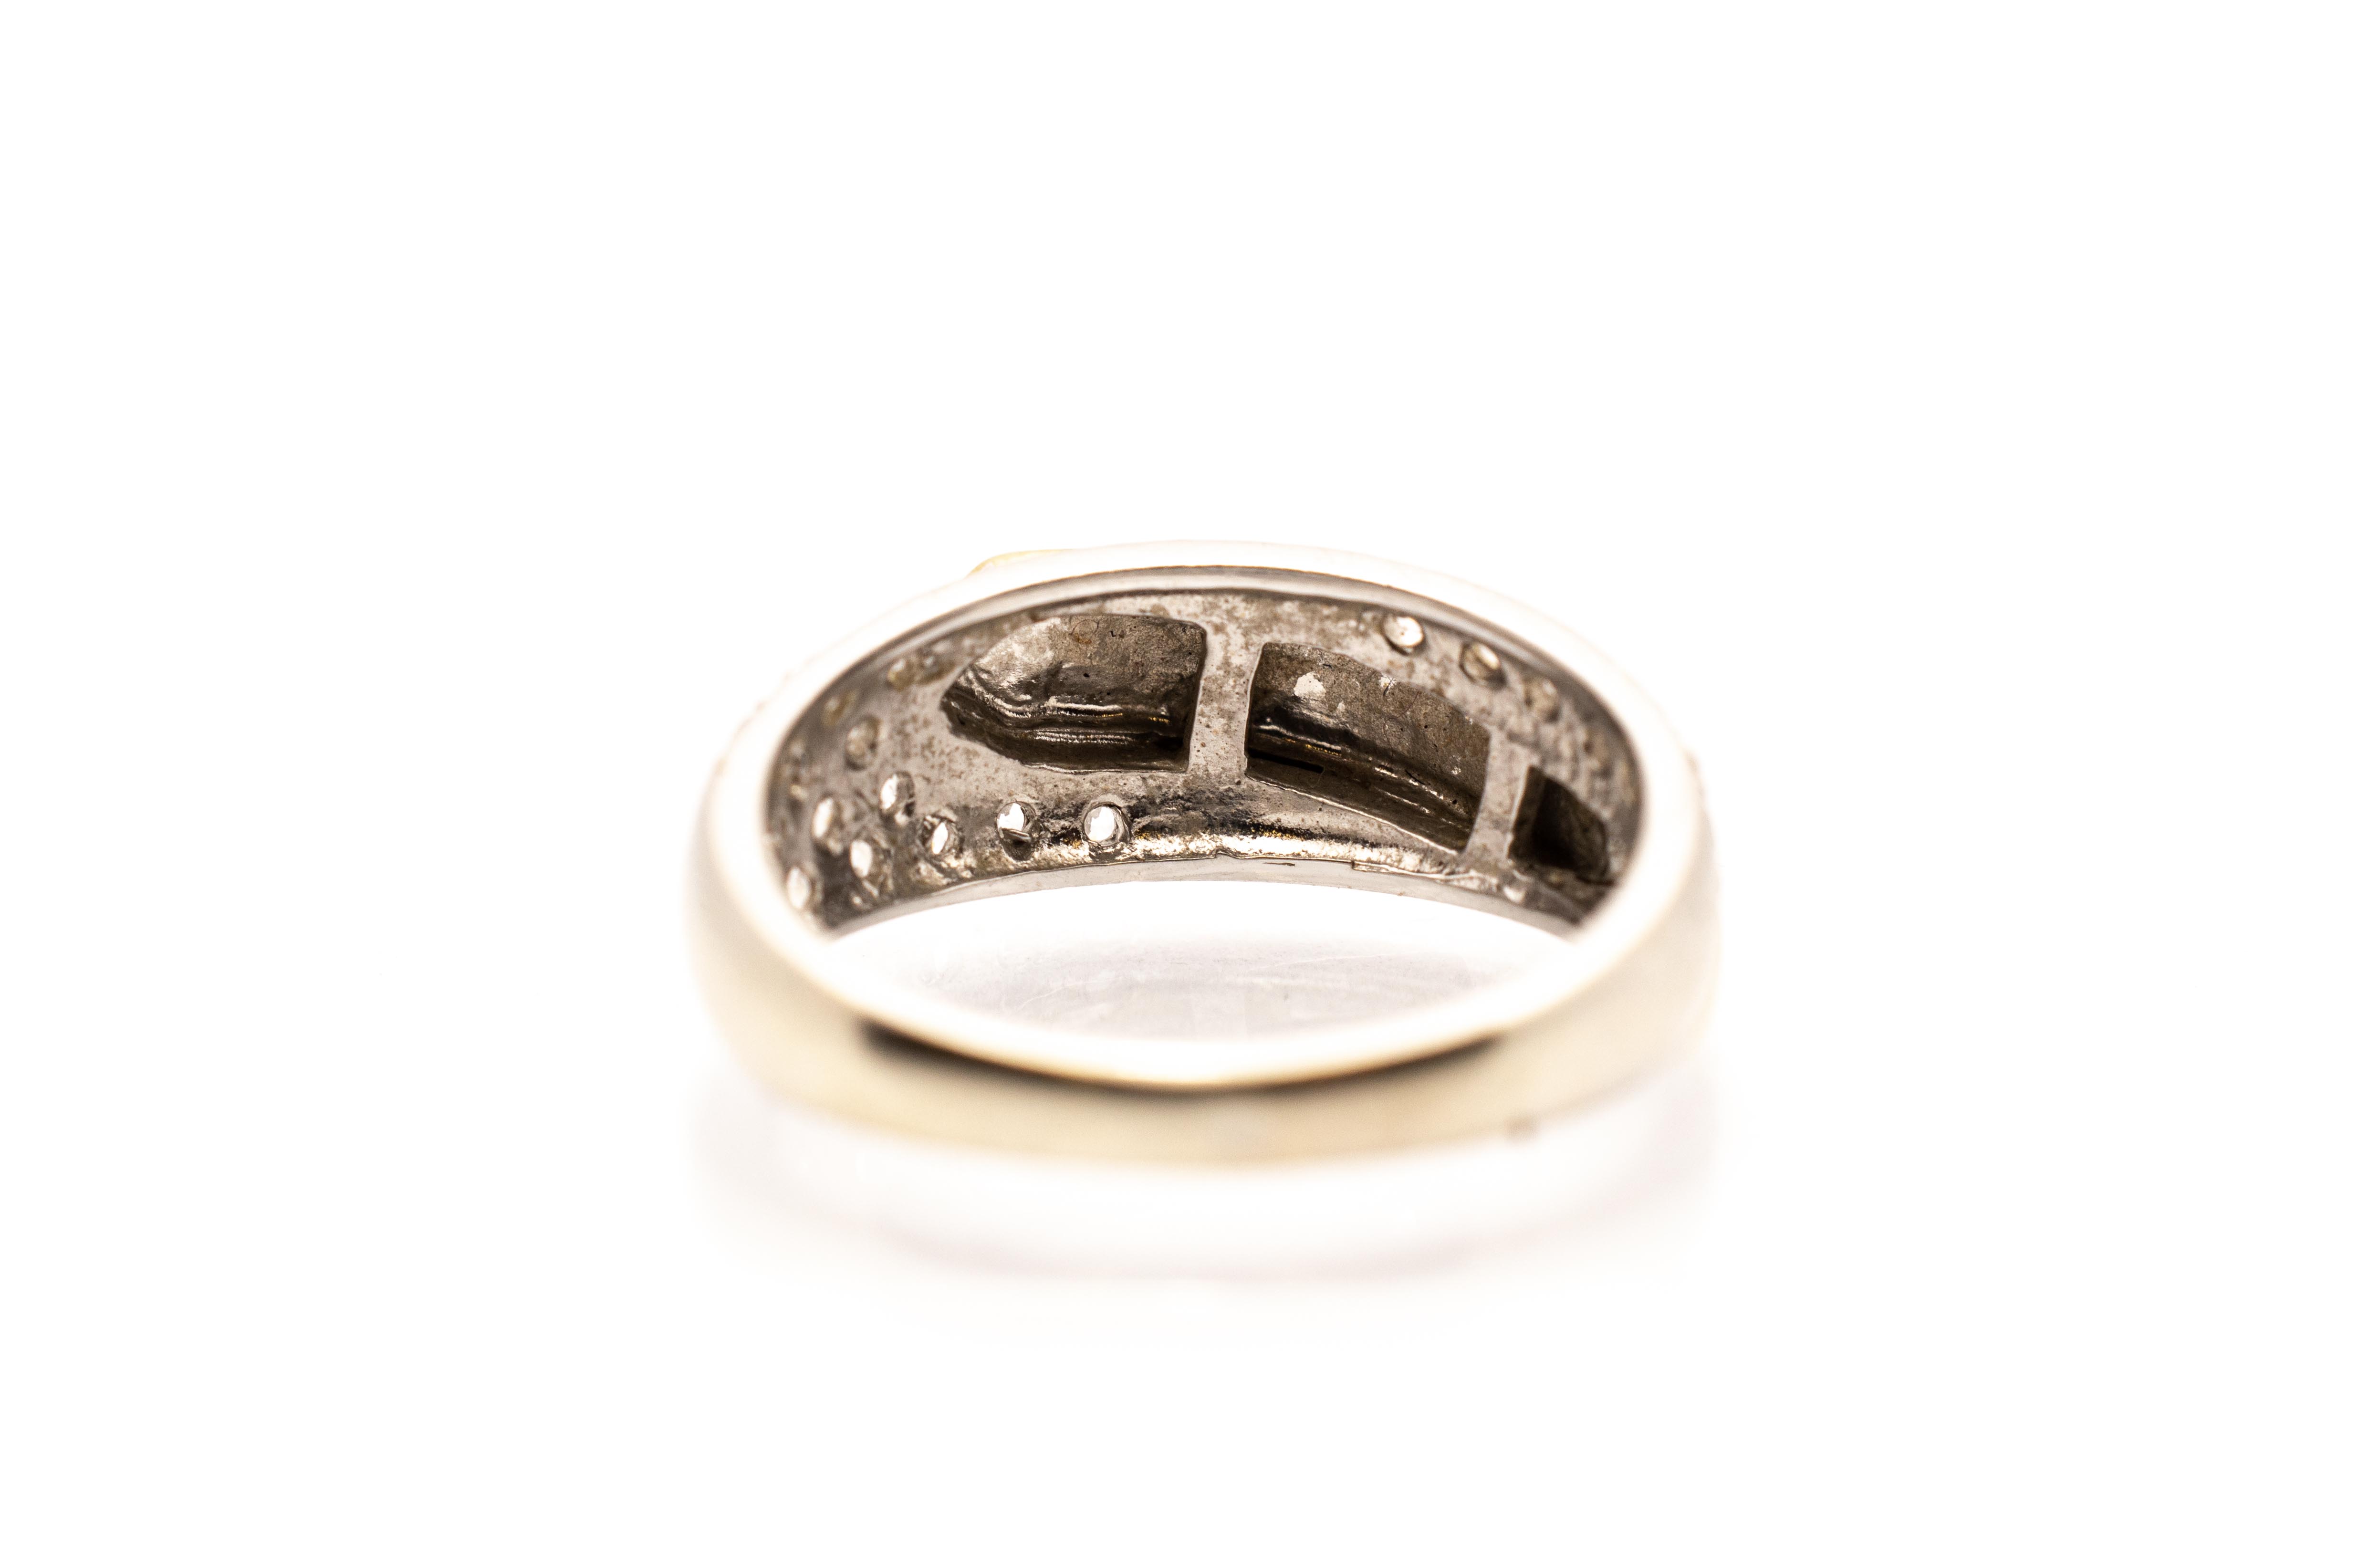 Prsten z kombinovaného zlata se zirkony, vel. 56